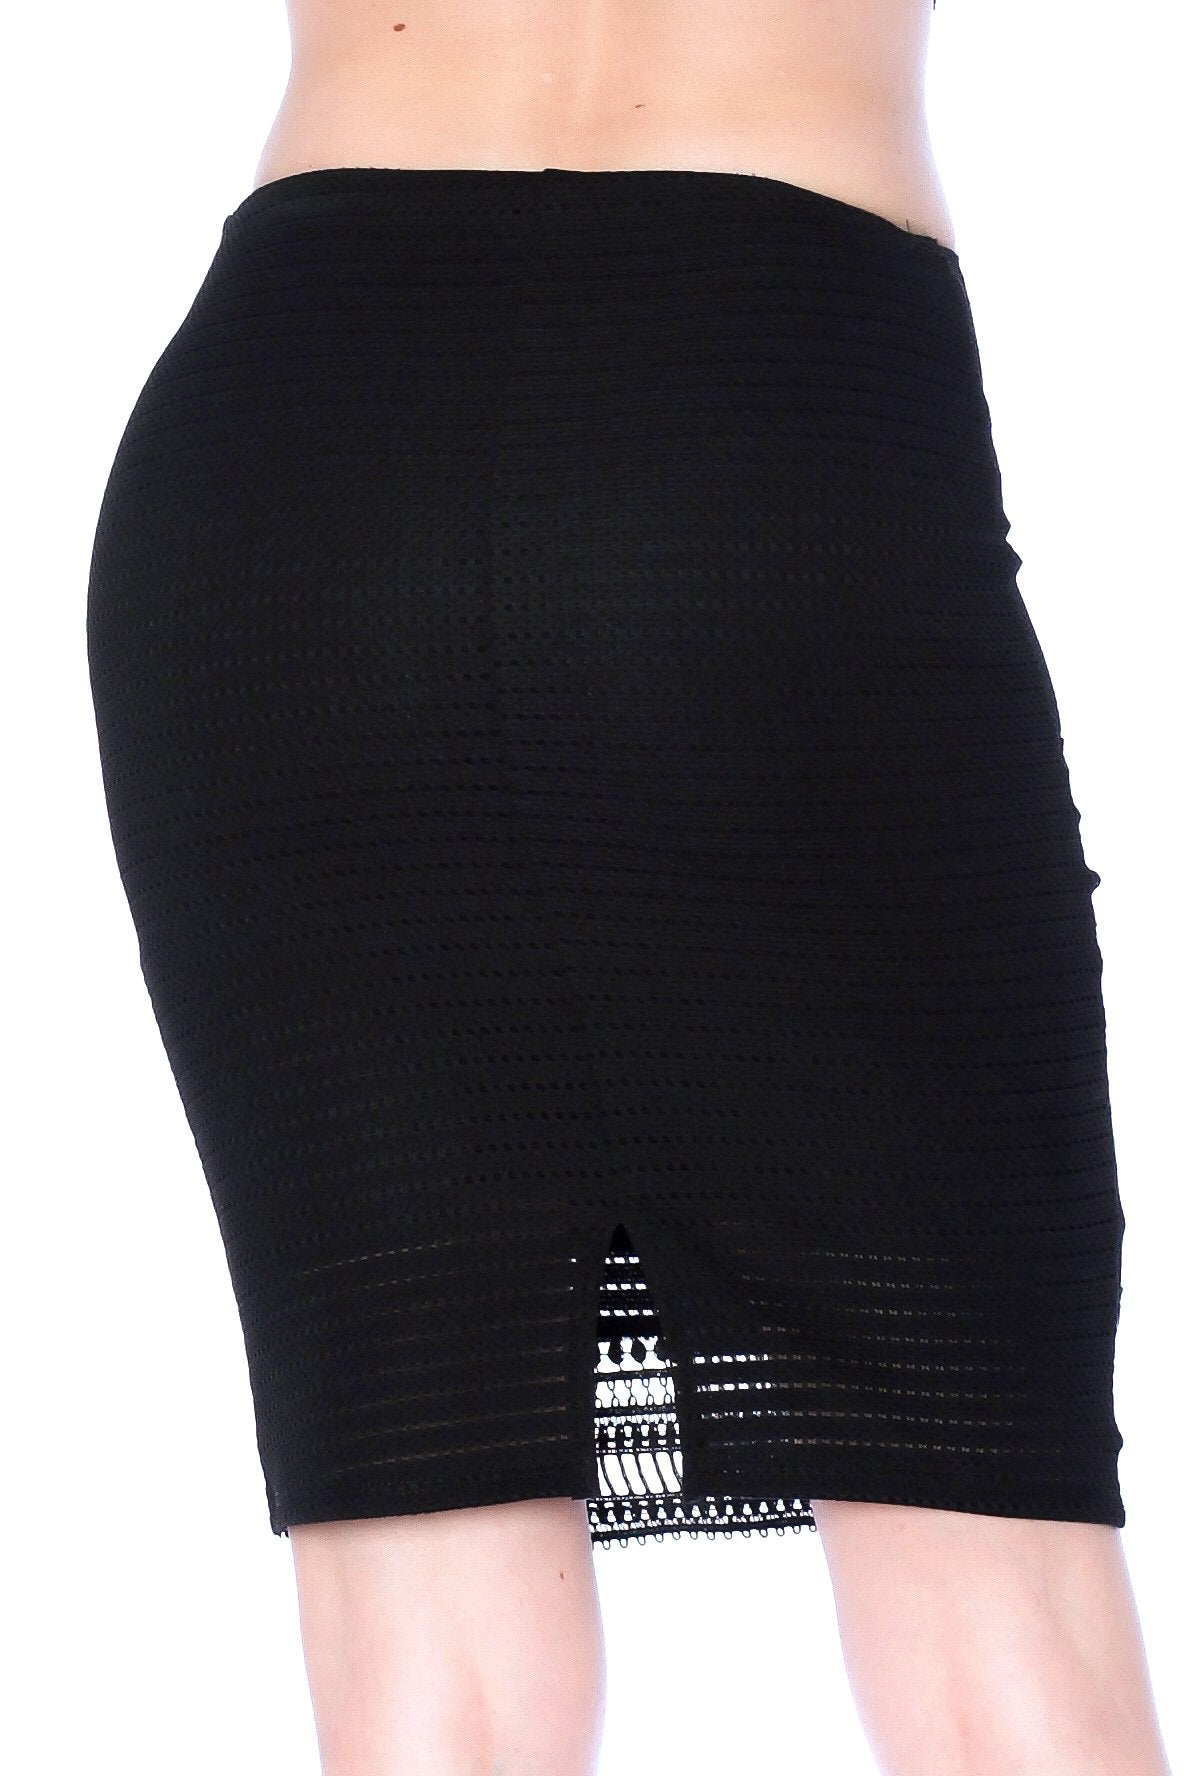 Crotchet knit Long Pencil Skirt with Slit on the back (Medium, Black)